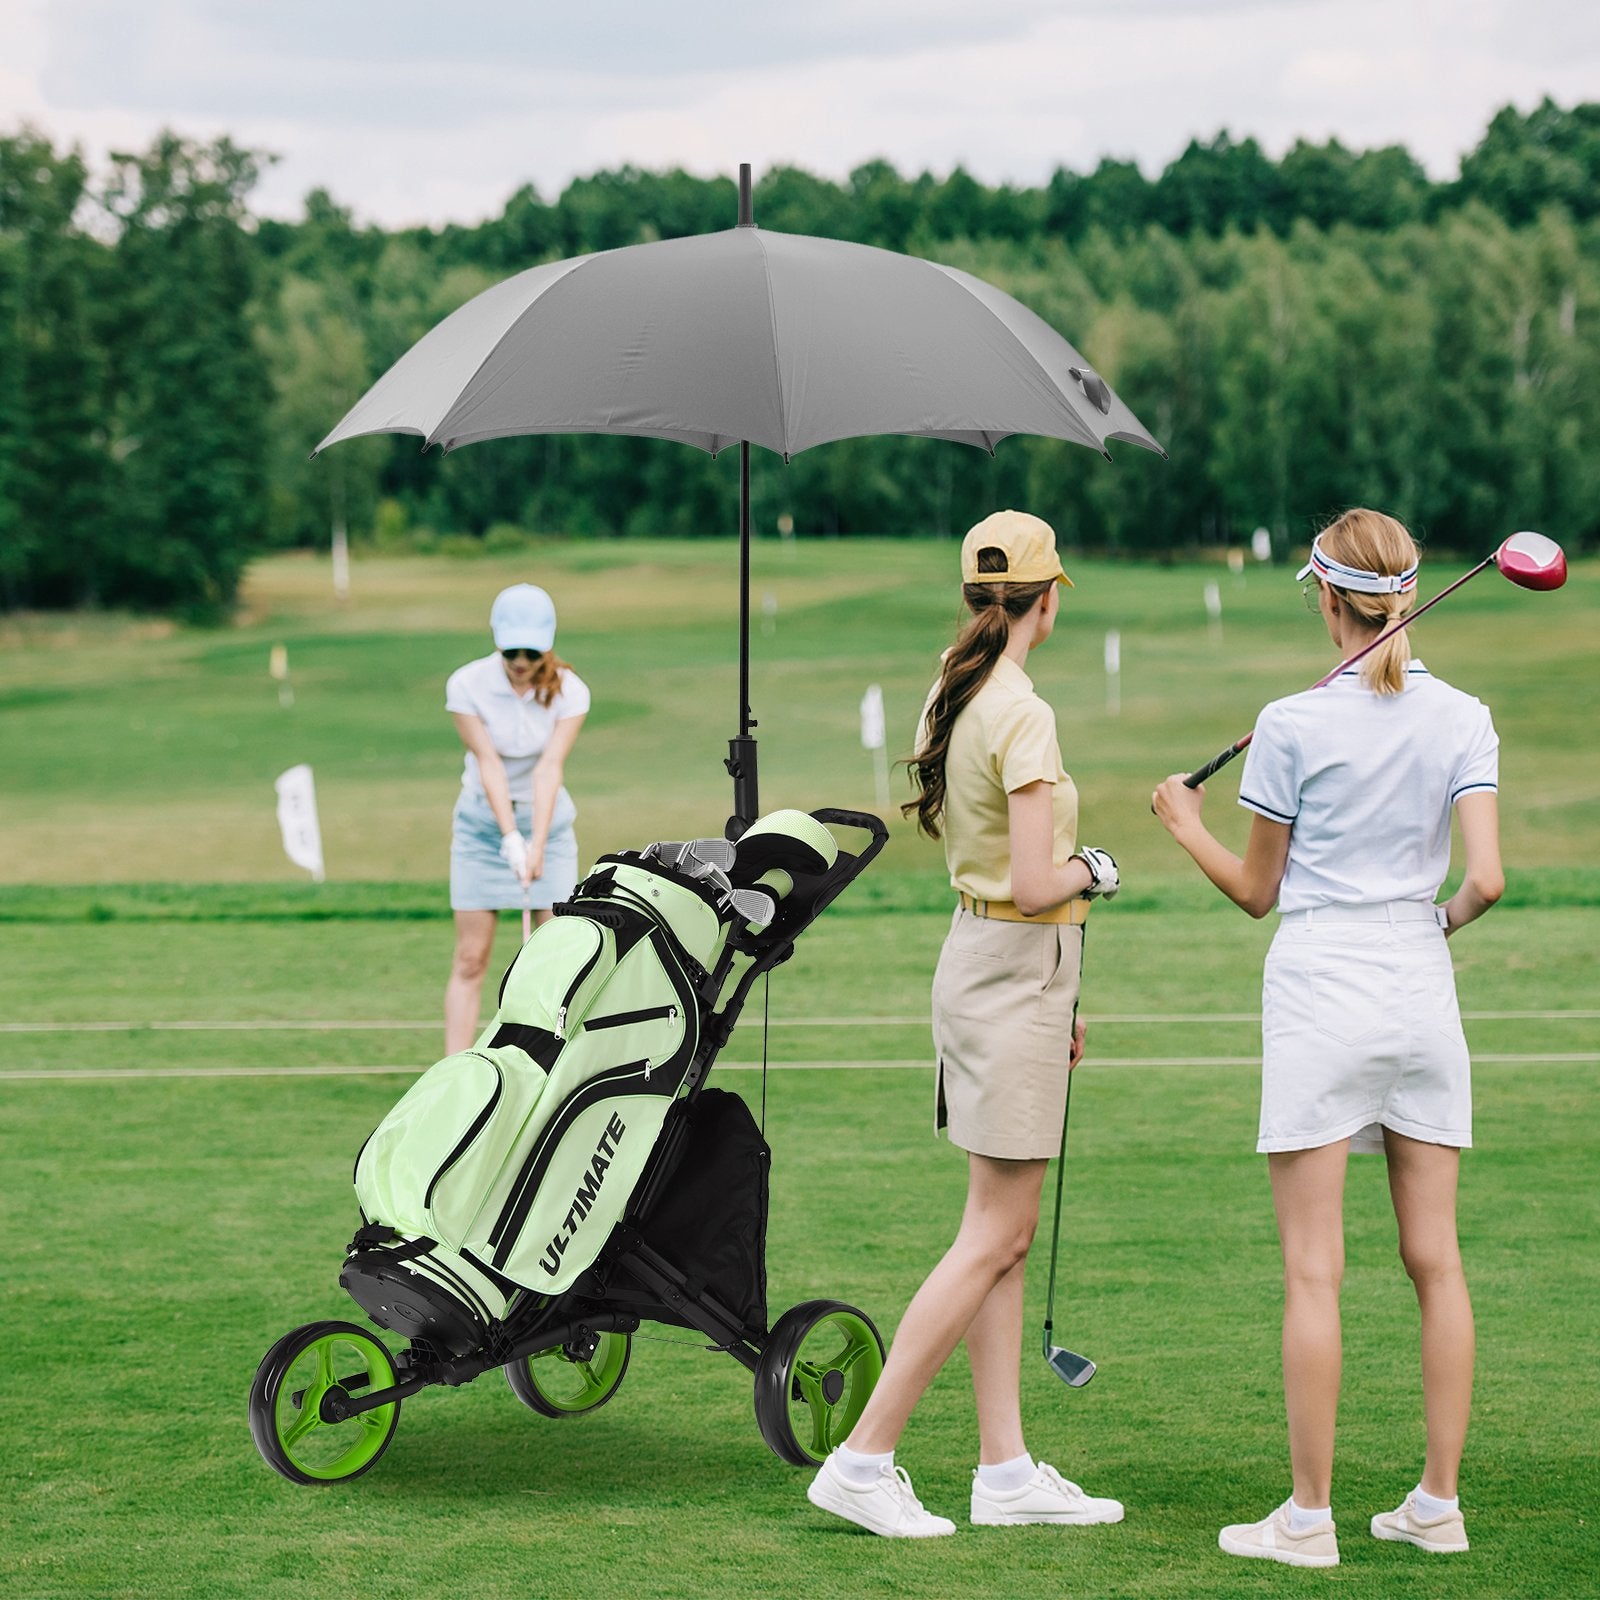 Folding 3 Wheels Golf Push Cart with Bag Scoreboard Adjustable Handle, Green at Gallery Canada